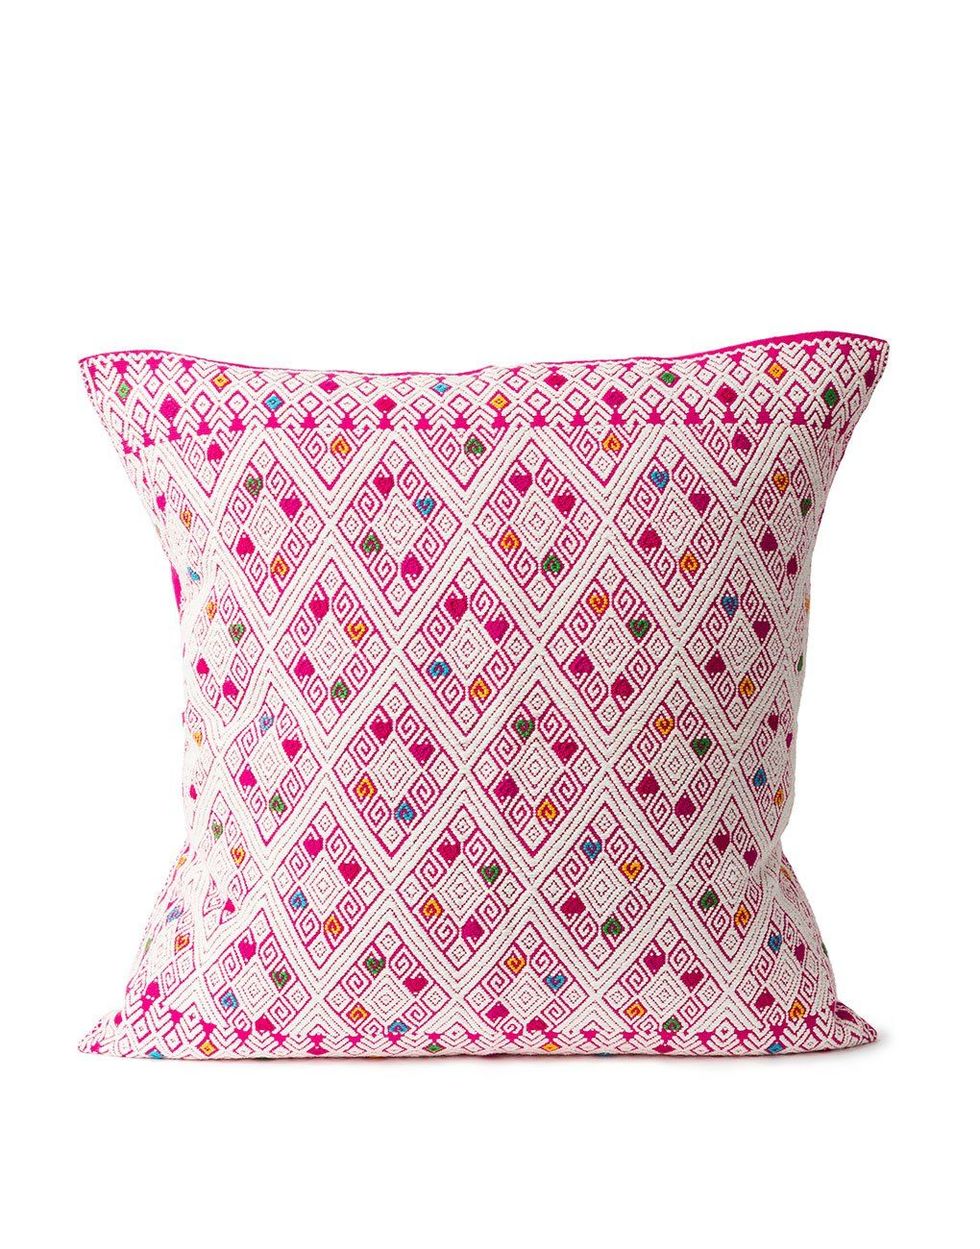 Chiapas Woven Pillow Cover